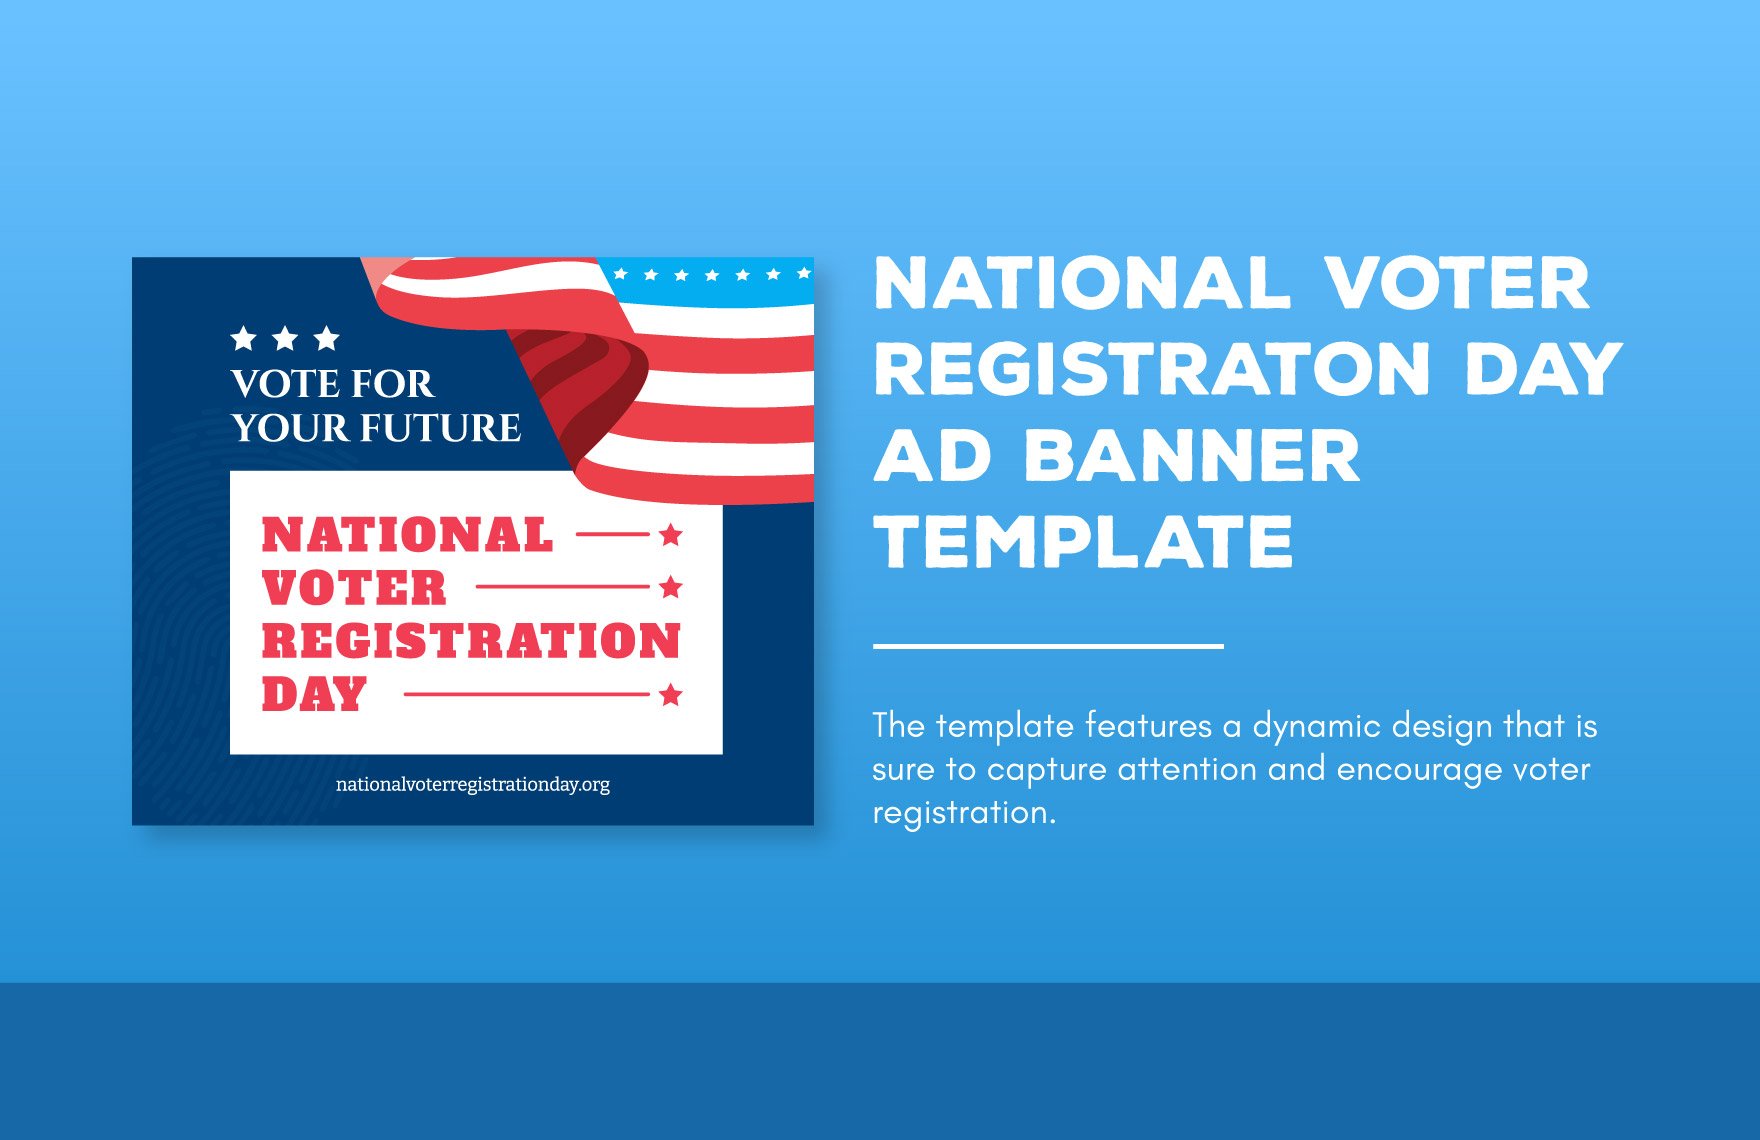 National Voter Registration Day Ad Banner Template